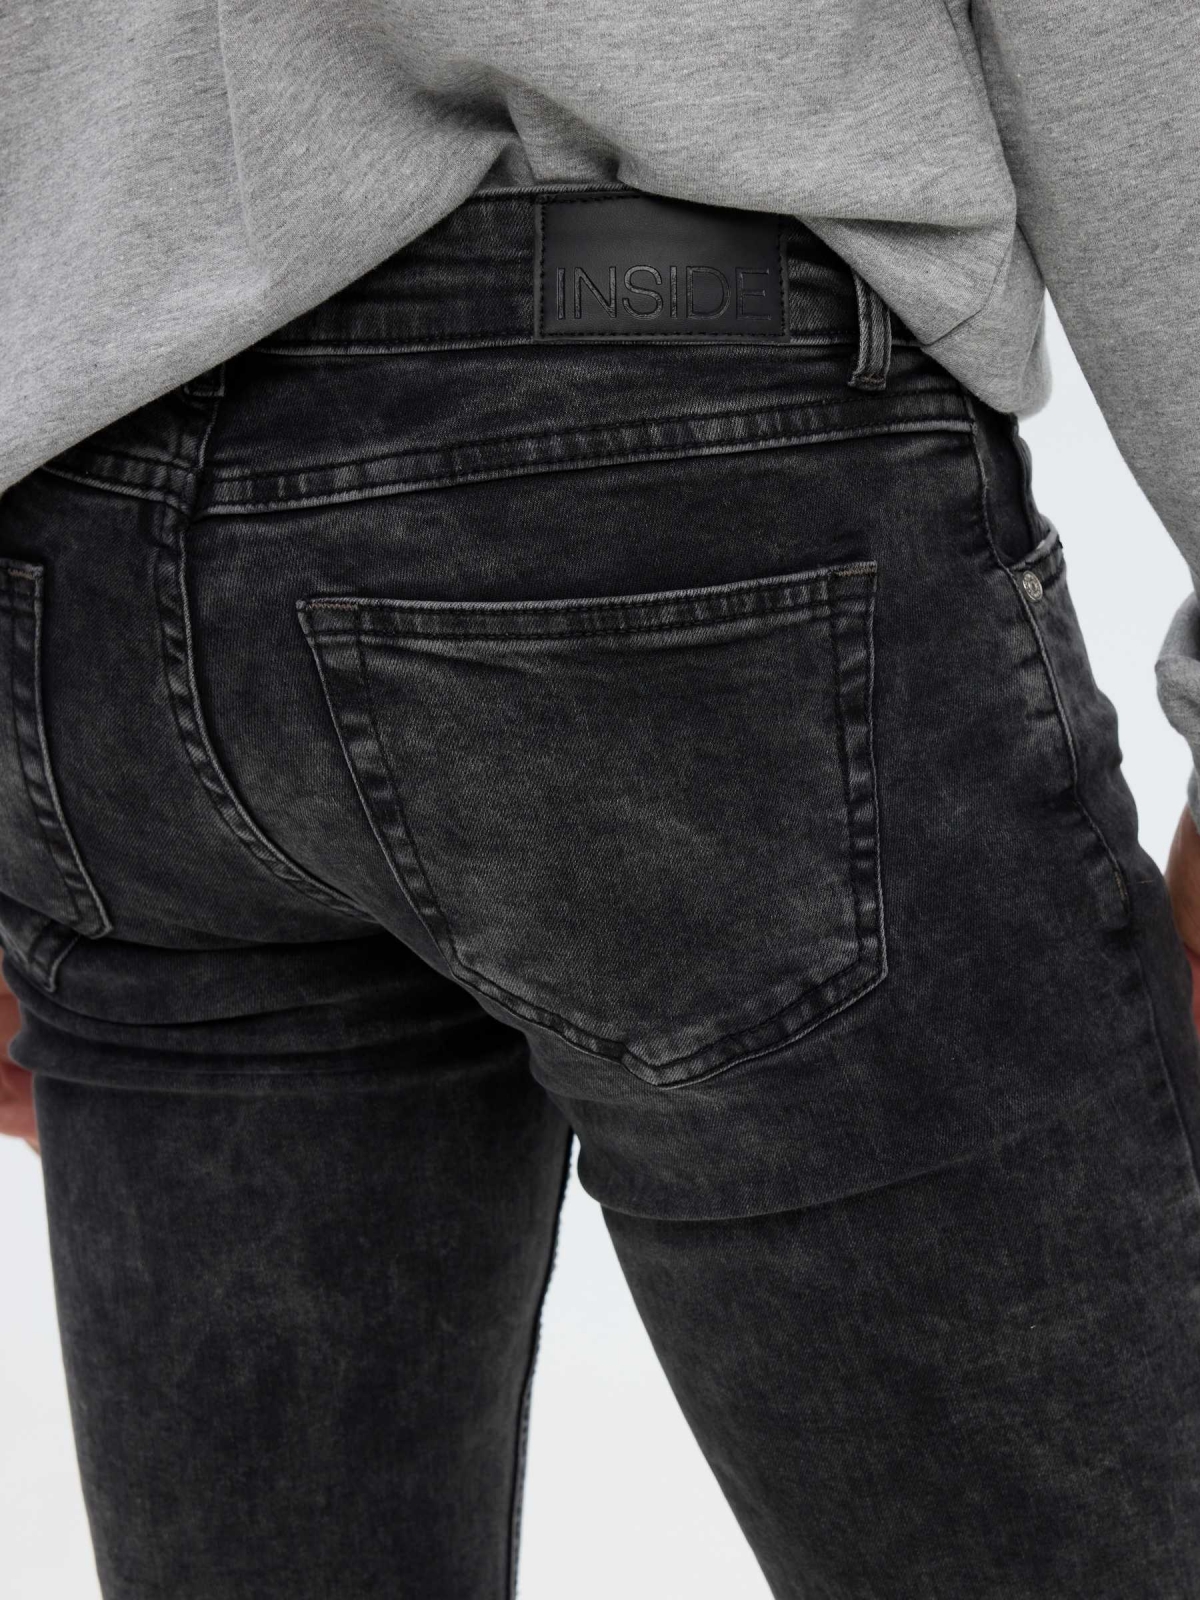 Super slim jeans dark grey detail view